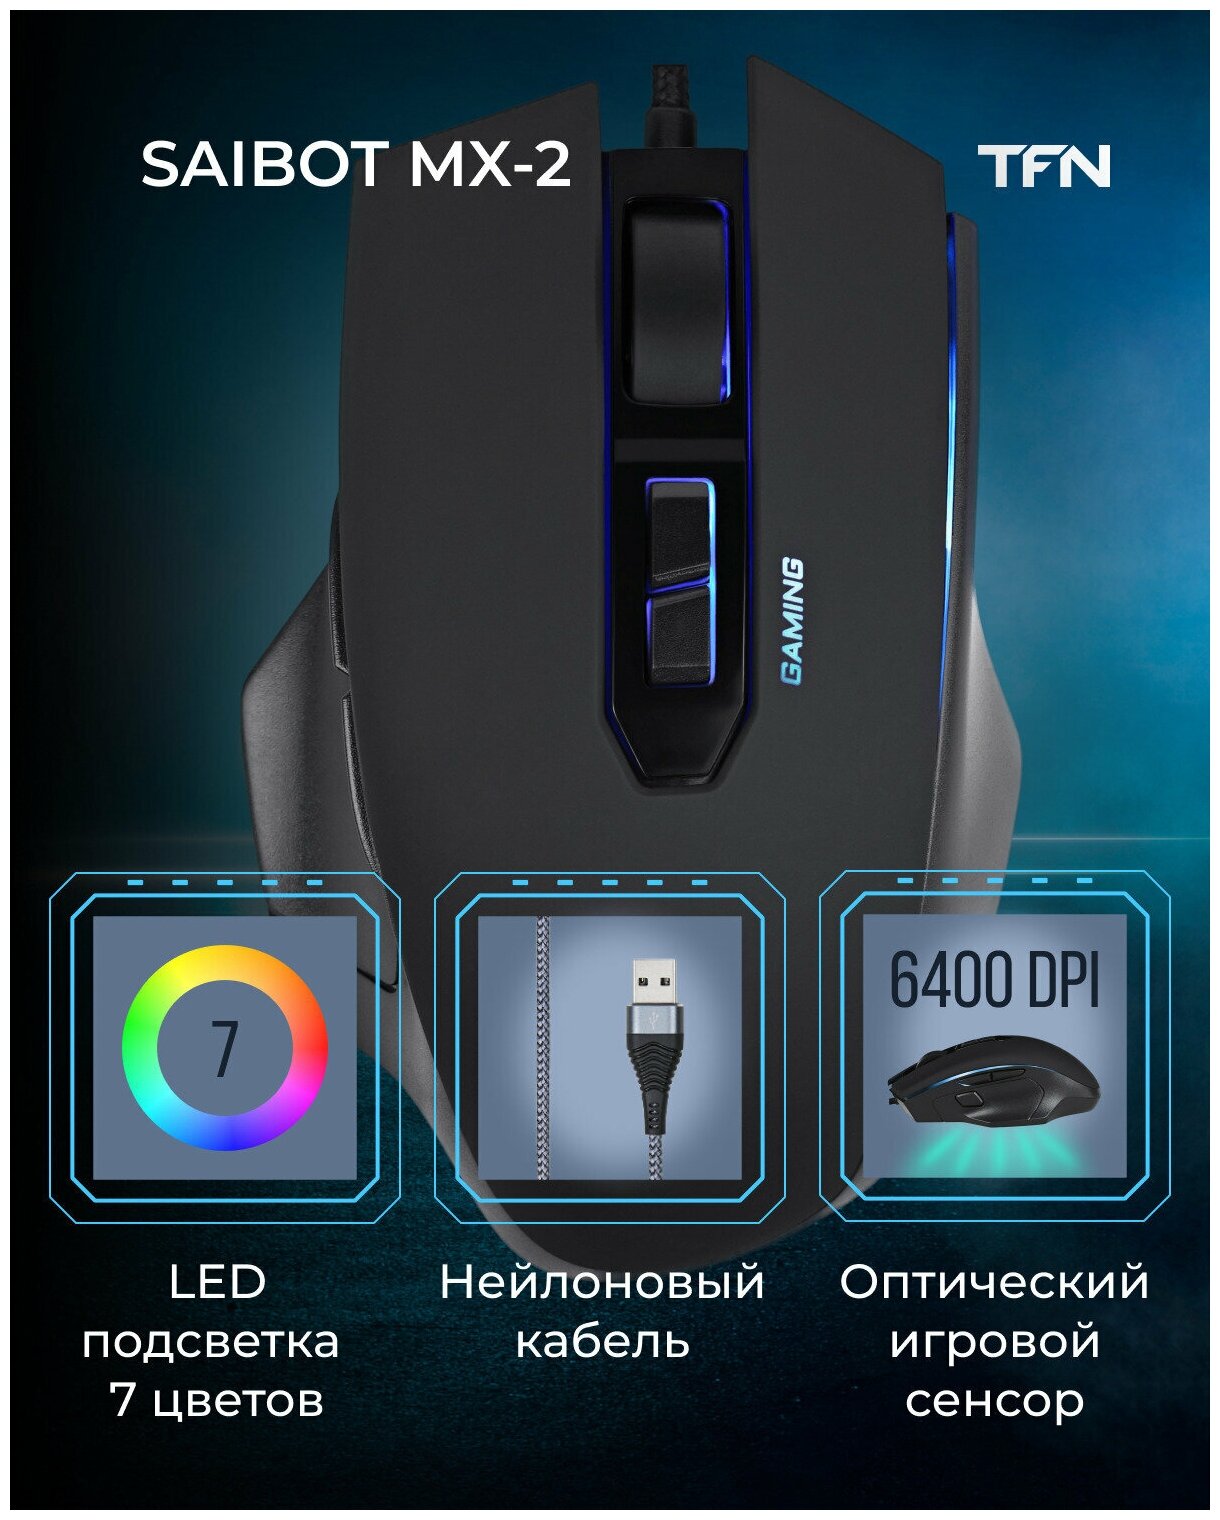 Мышка TFN Saibot MX-2 black